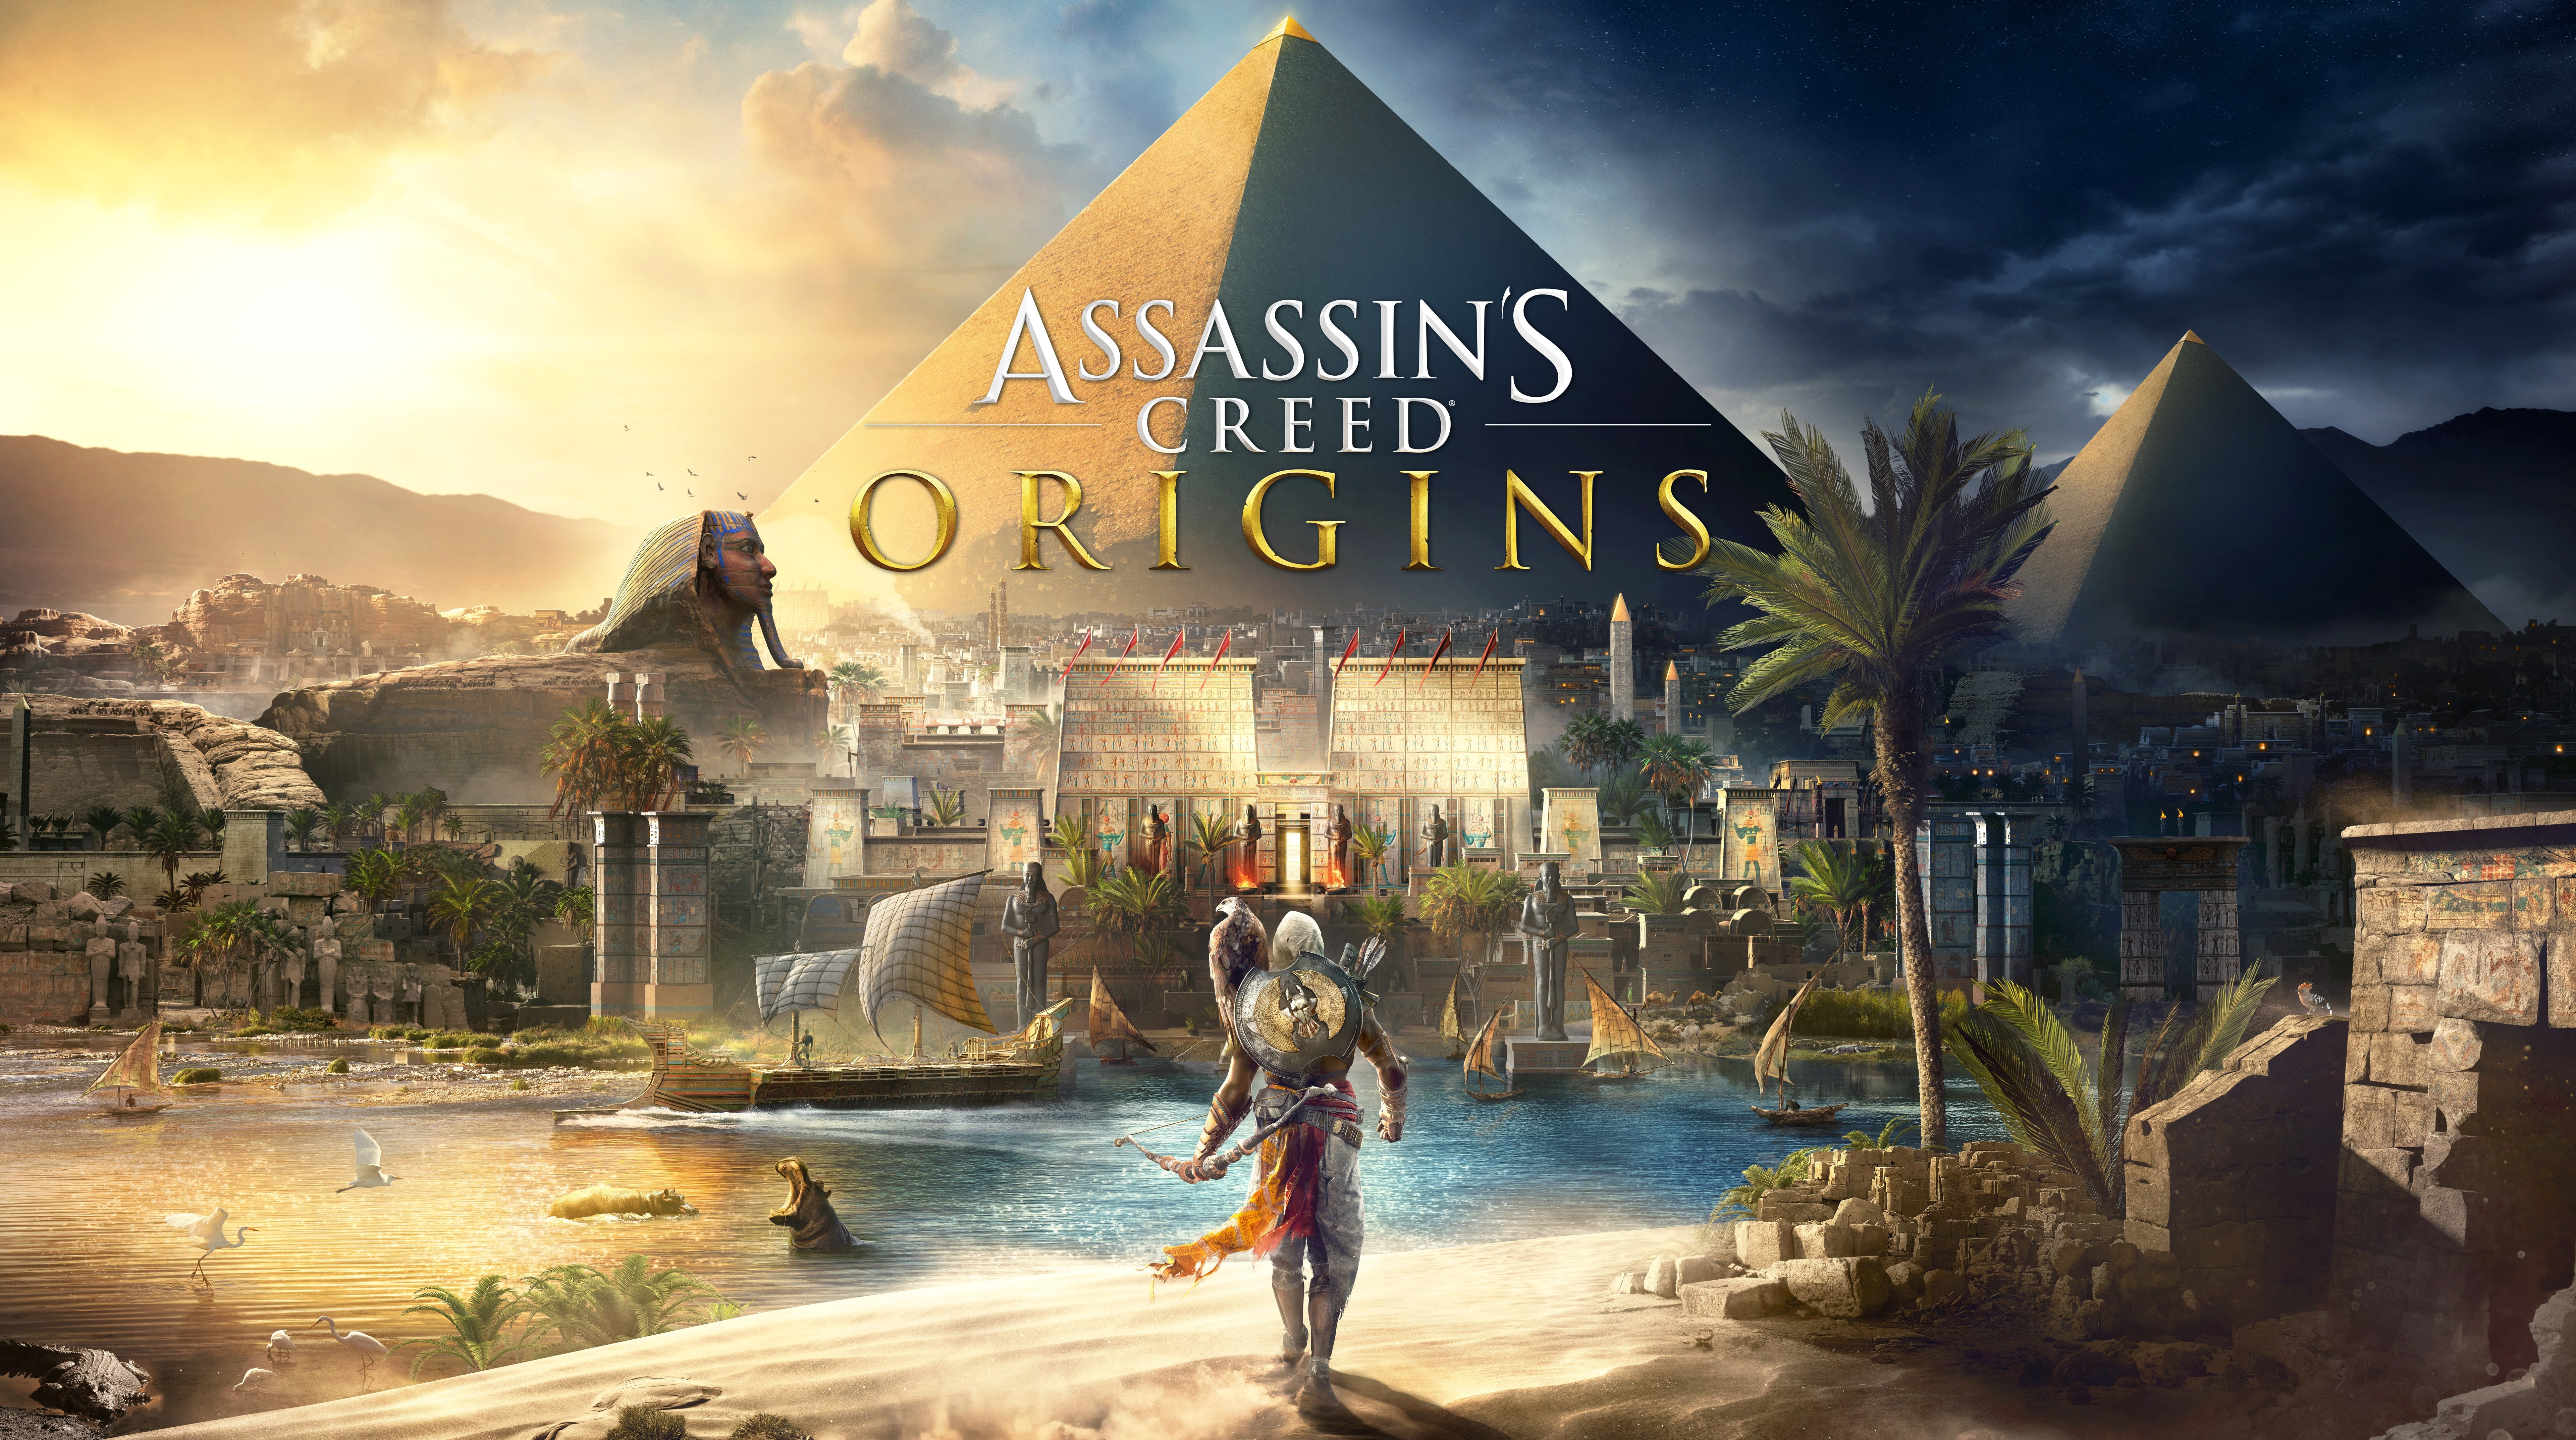 Assassins Creed Origins 2017 8K, Assassin's Creed Origins digital wallpaper